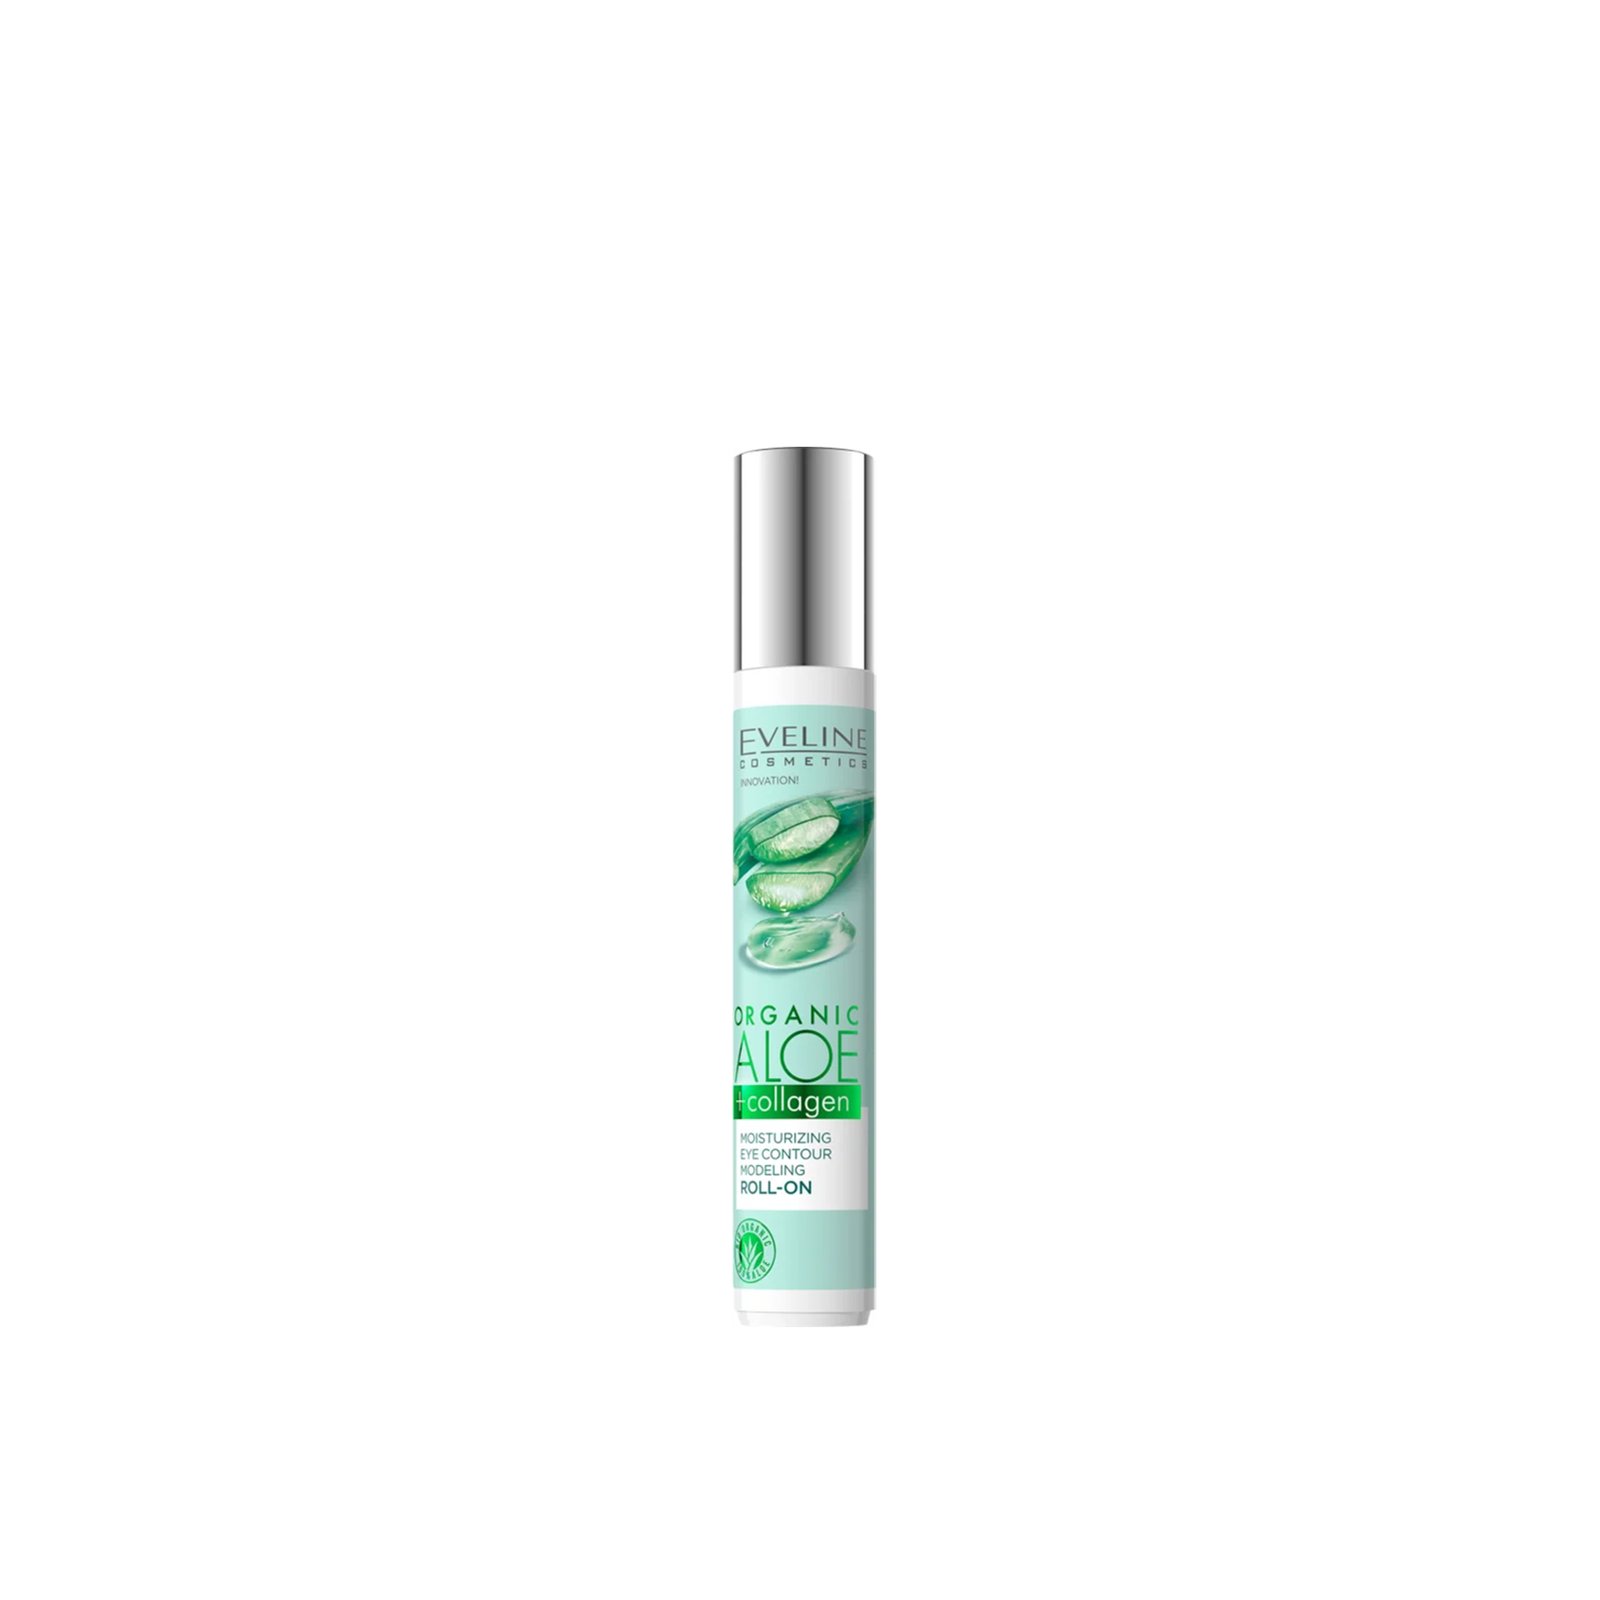 Eveline Cosmetics Organic Aloe + Collagen Moisturizing Eye Contour Modeling Roll-On 15ml